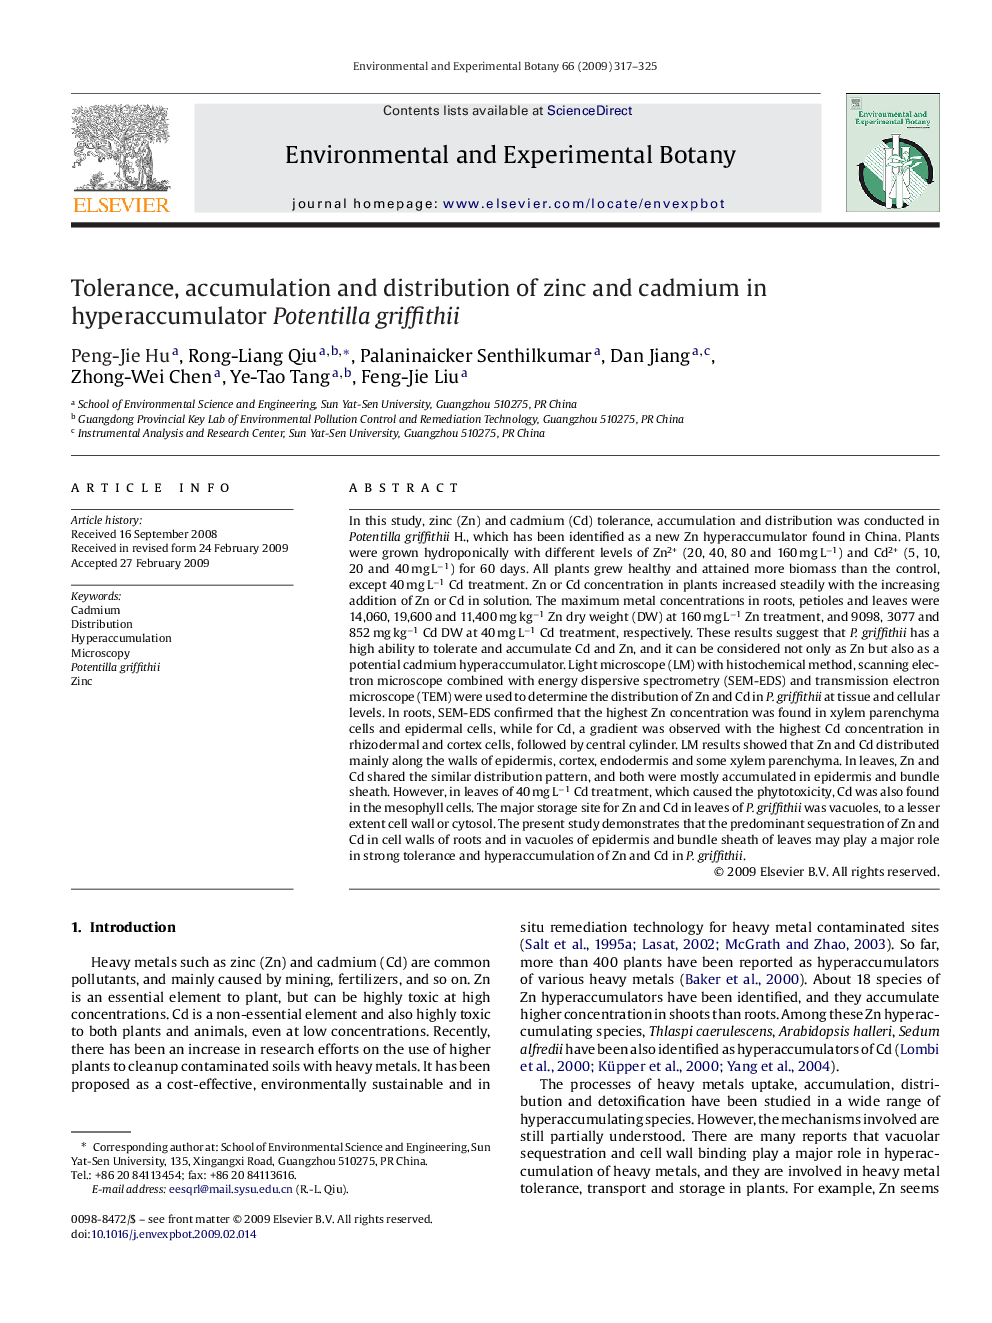 Tolerance, accumulation and distribution of zinc and cadmium in hyperaccumulator Potentilla griffithii